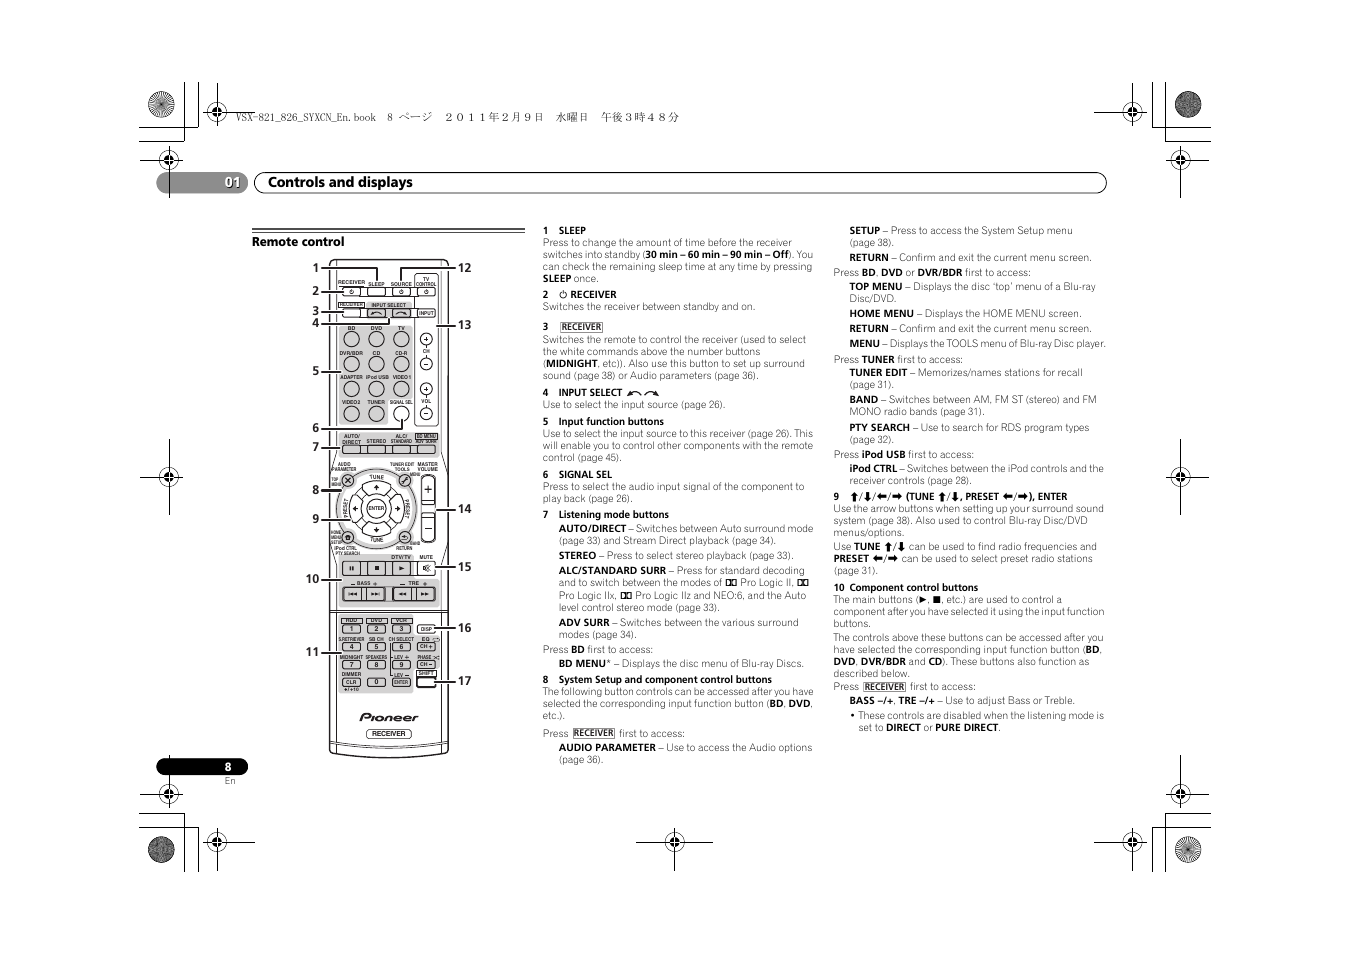 Remote control, Controls and displays 01 | Pioneer VSX-821 User Manual